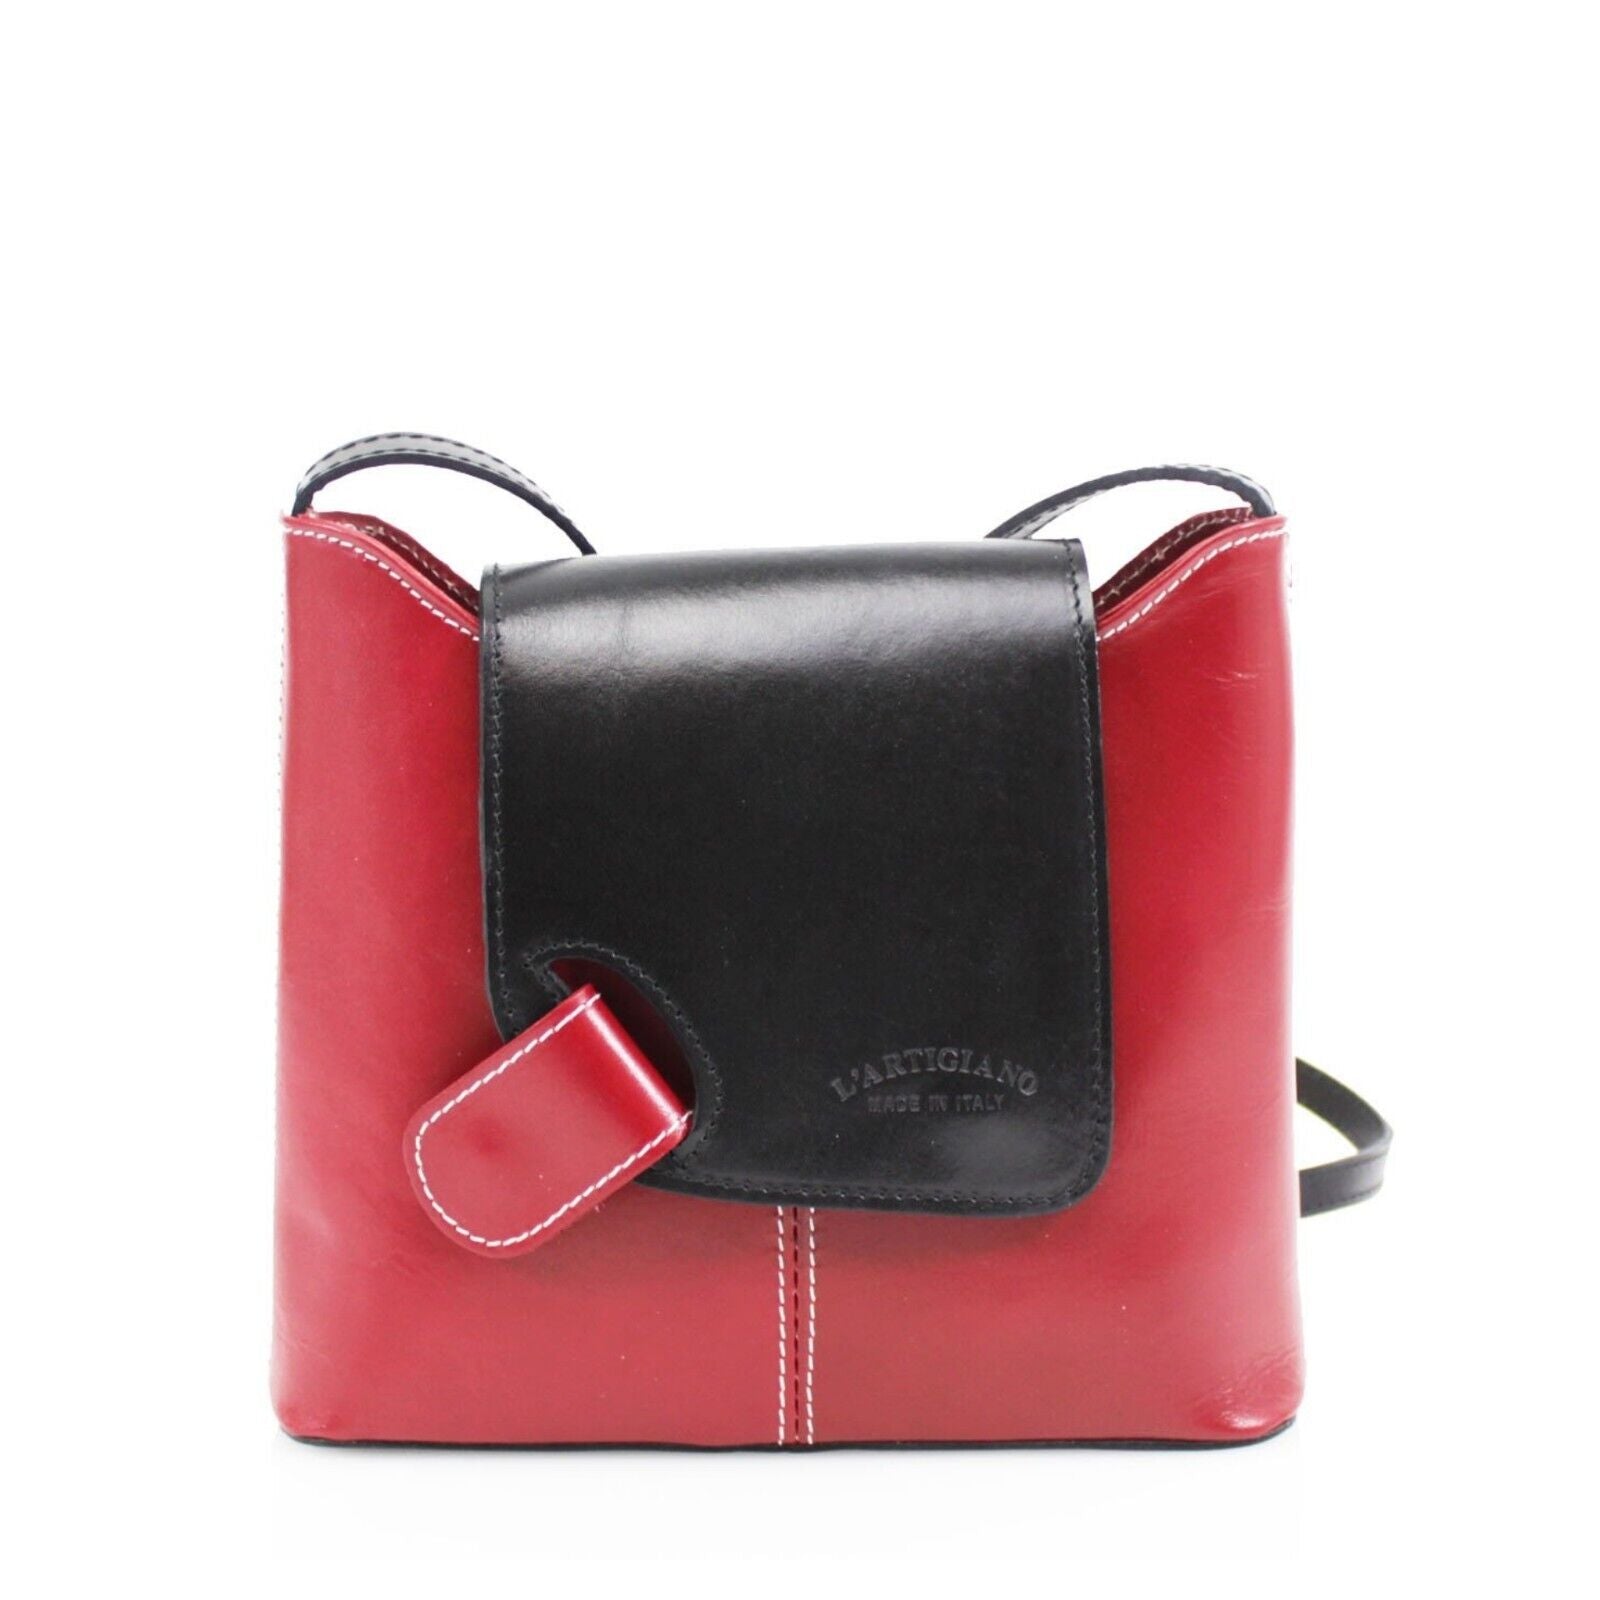 VERA PELLE Cascino Patent Italian Leather Crossbody Bag - A2Z UK